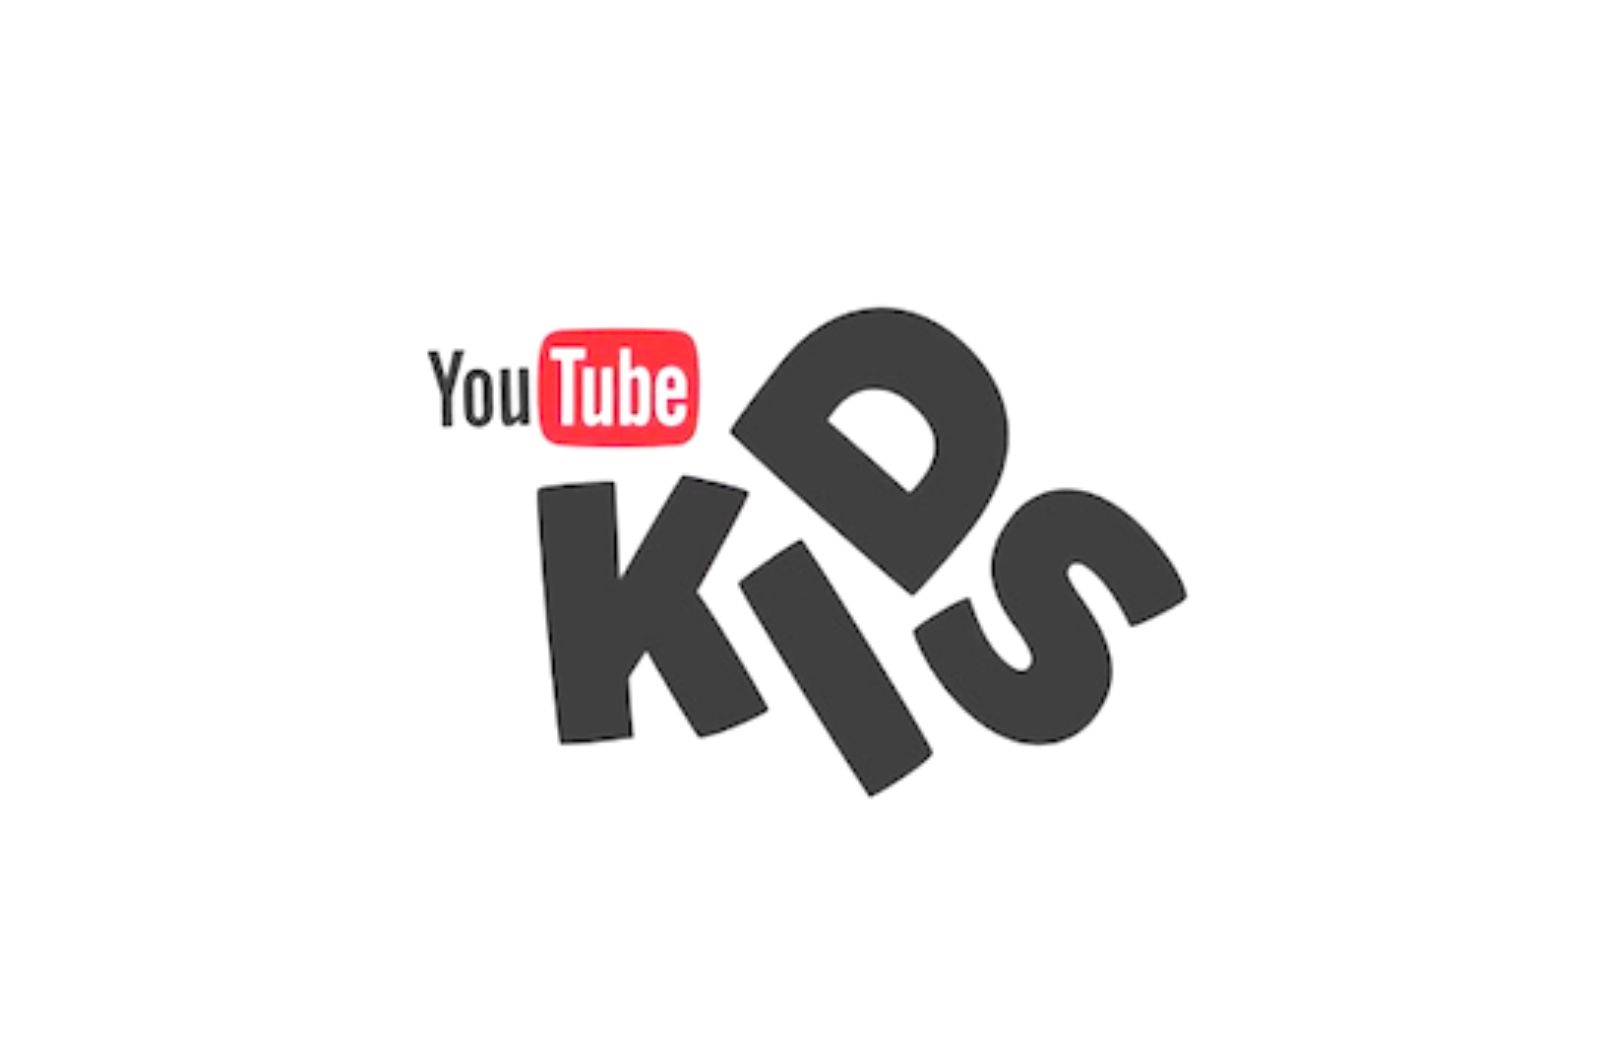 E' nata YouTube Kids, l'App dedicata ai bambini